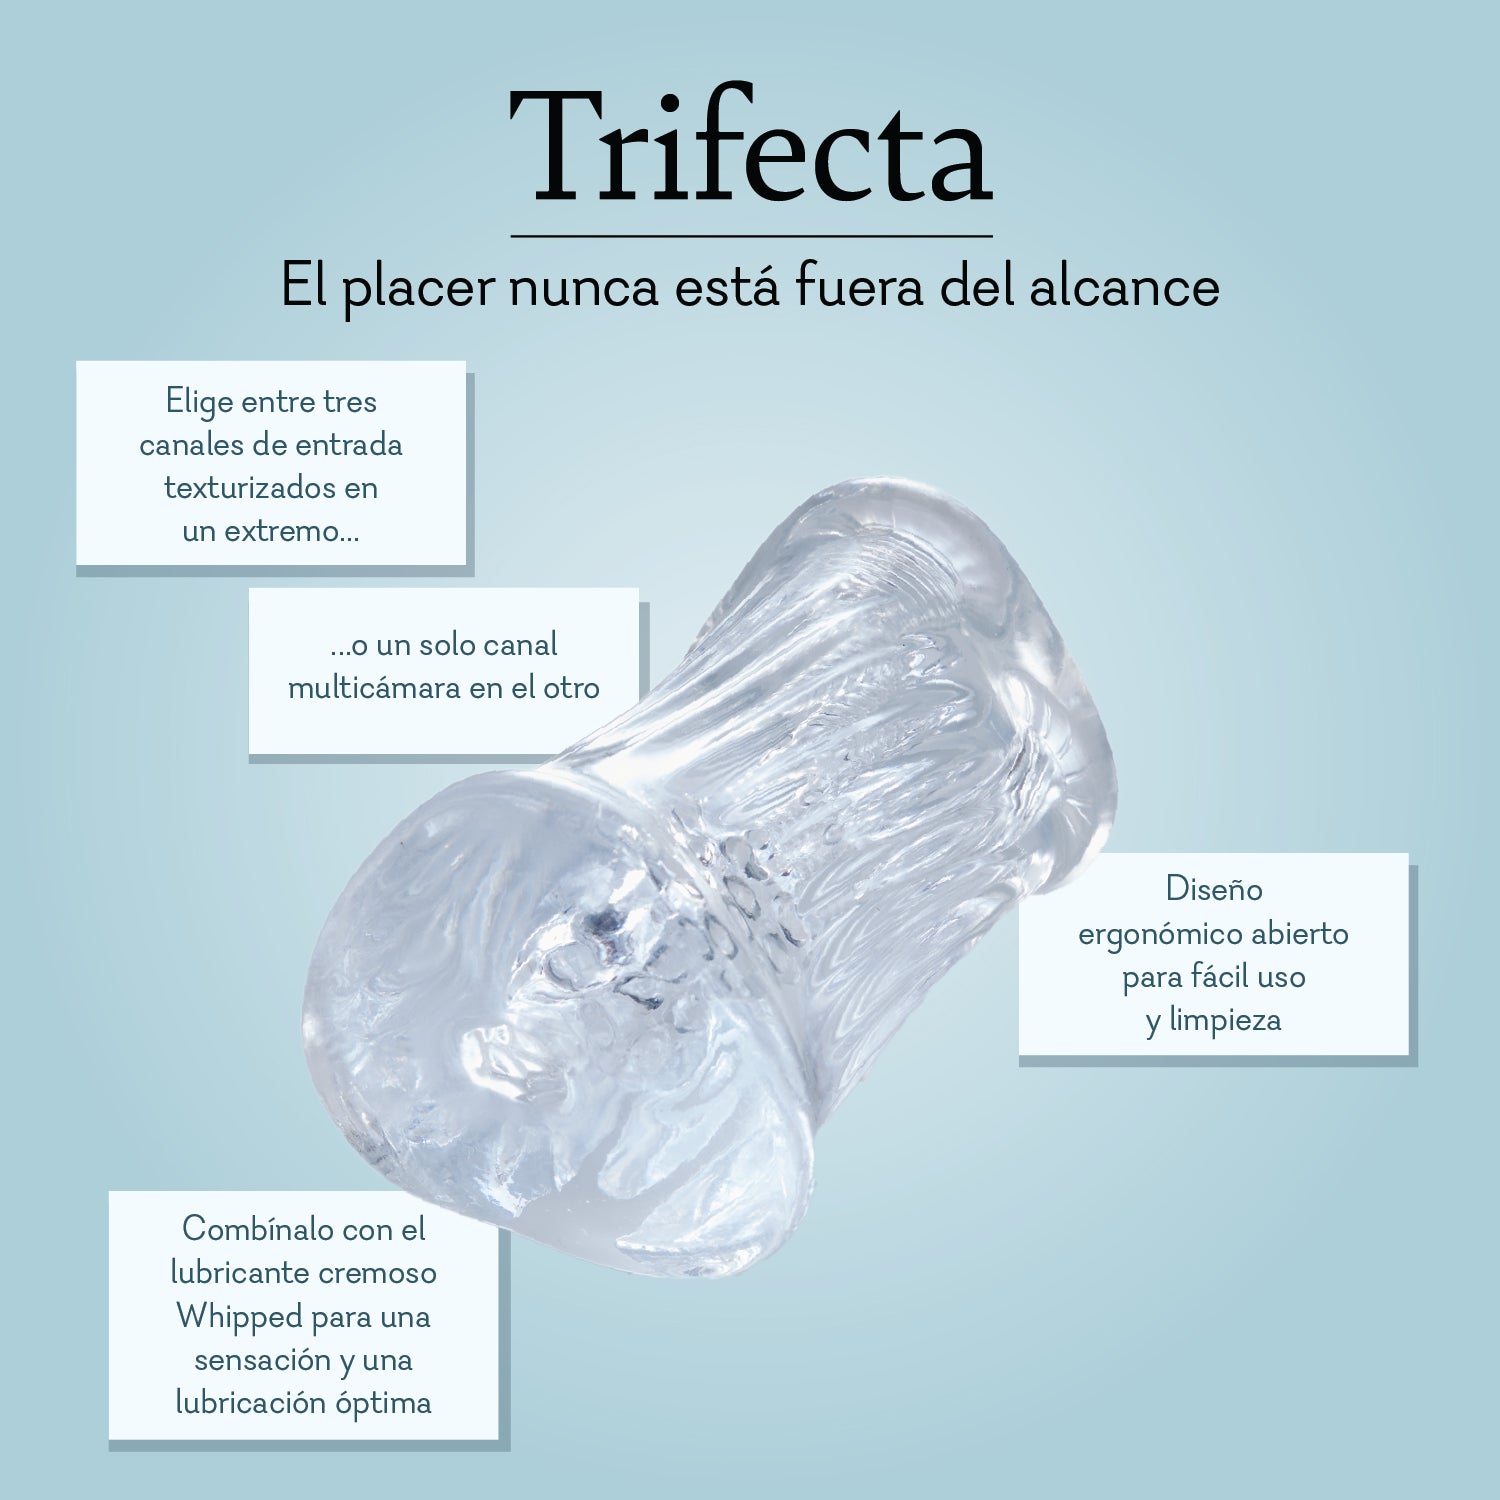 Trifecta Infographic Spanish 2 Pure Romance